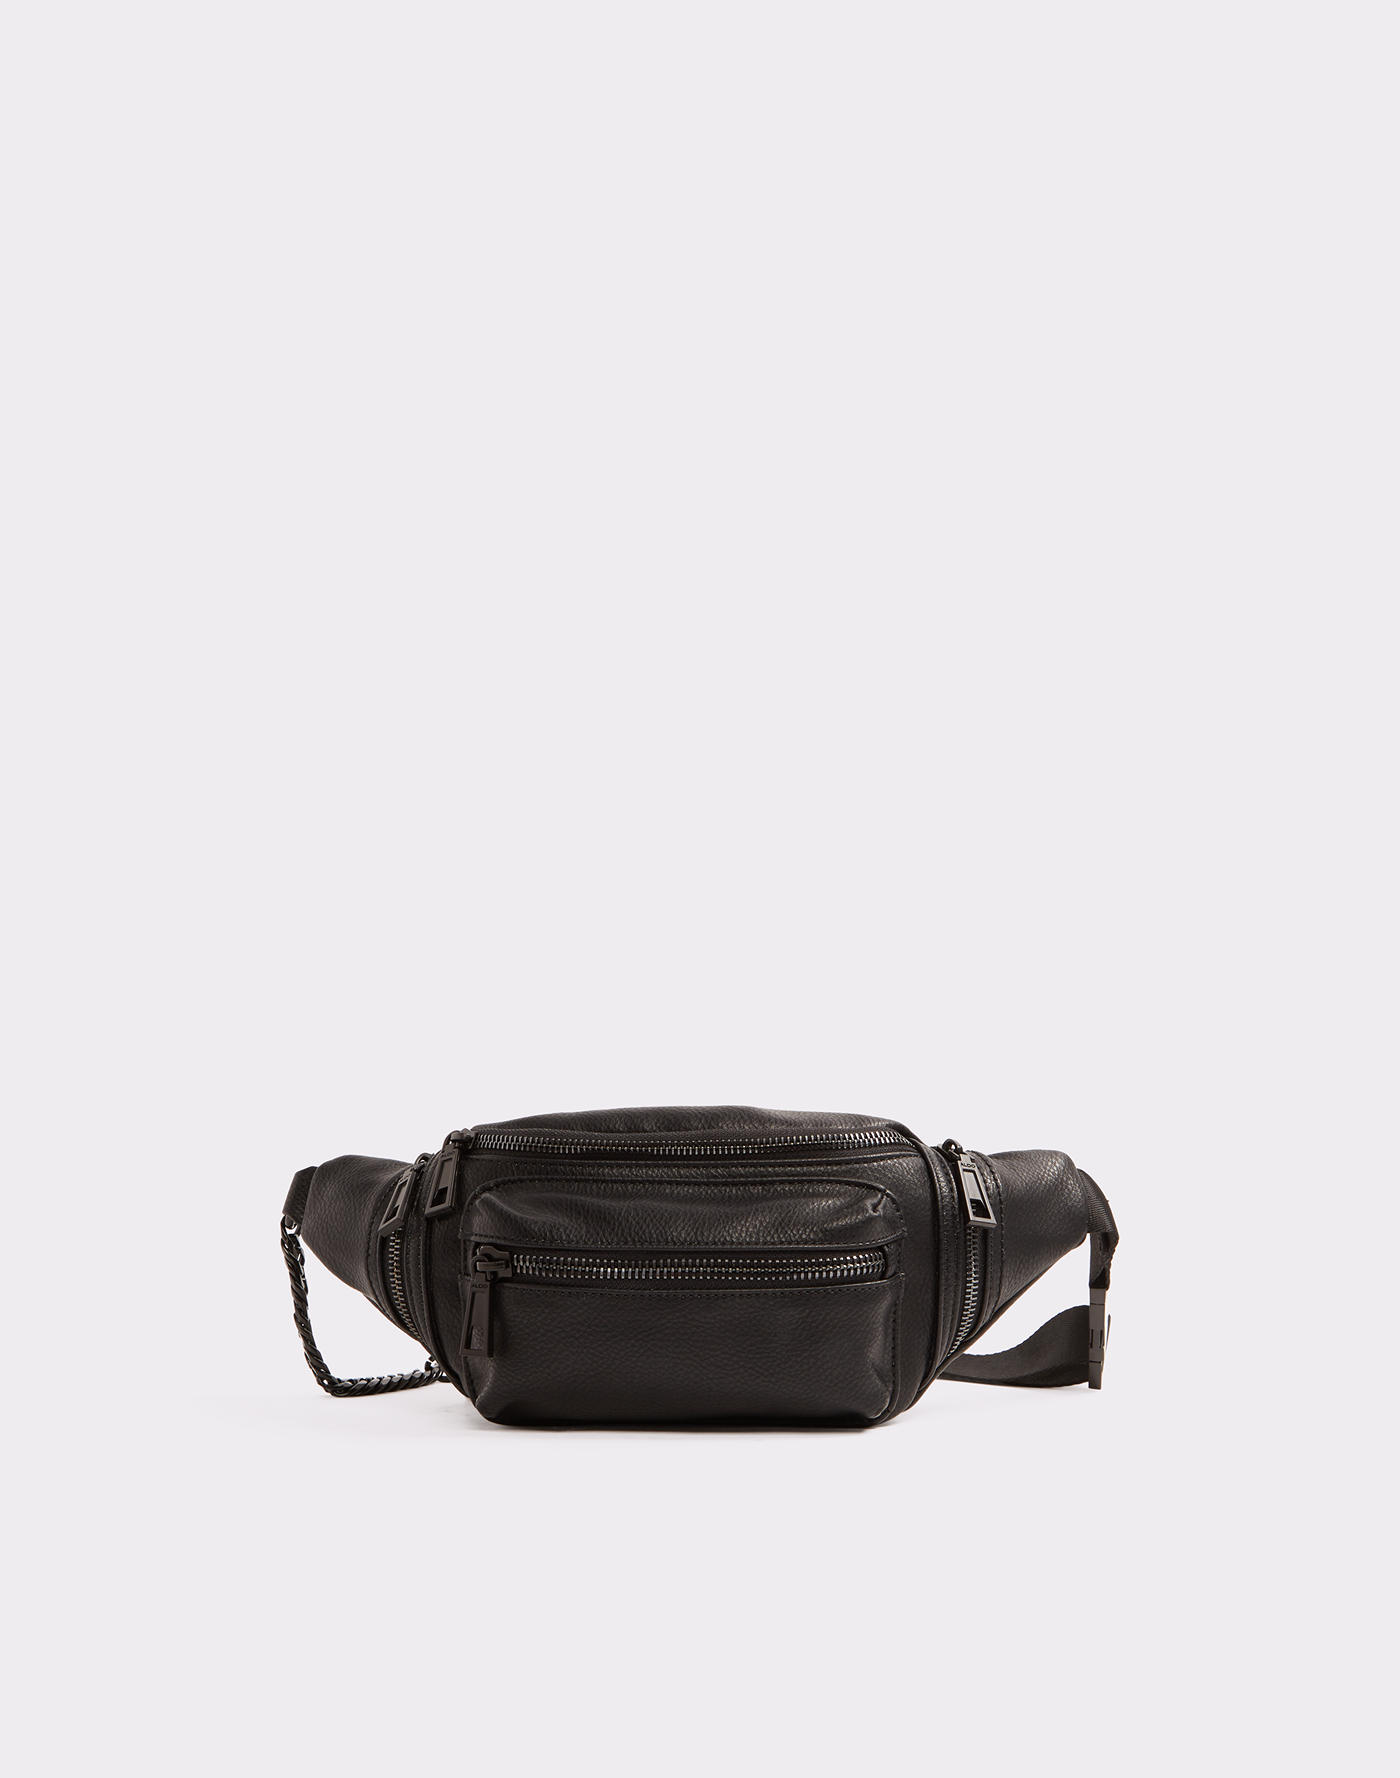 Handbags for Women | ALDO US